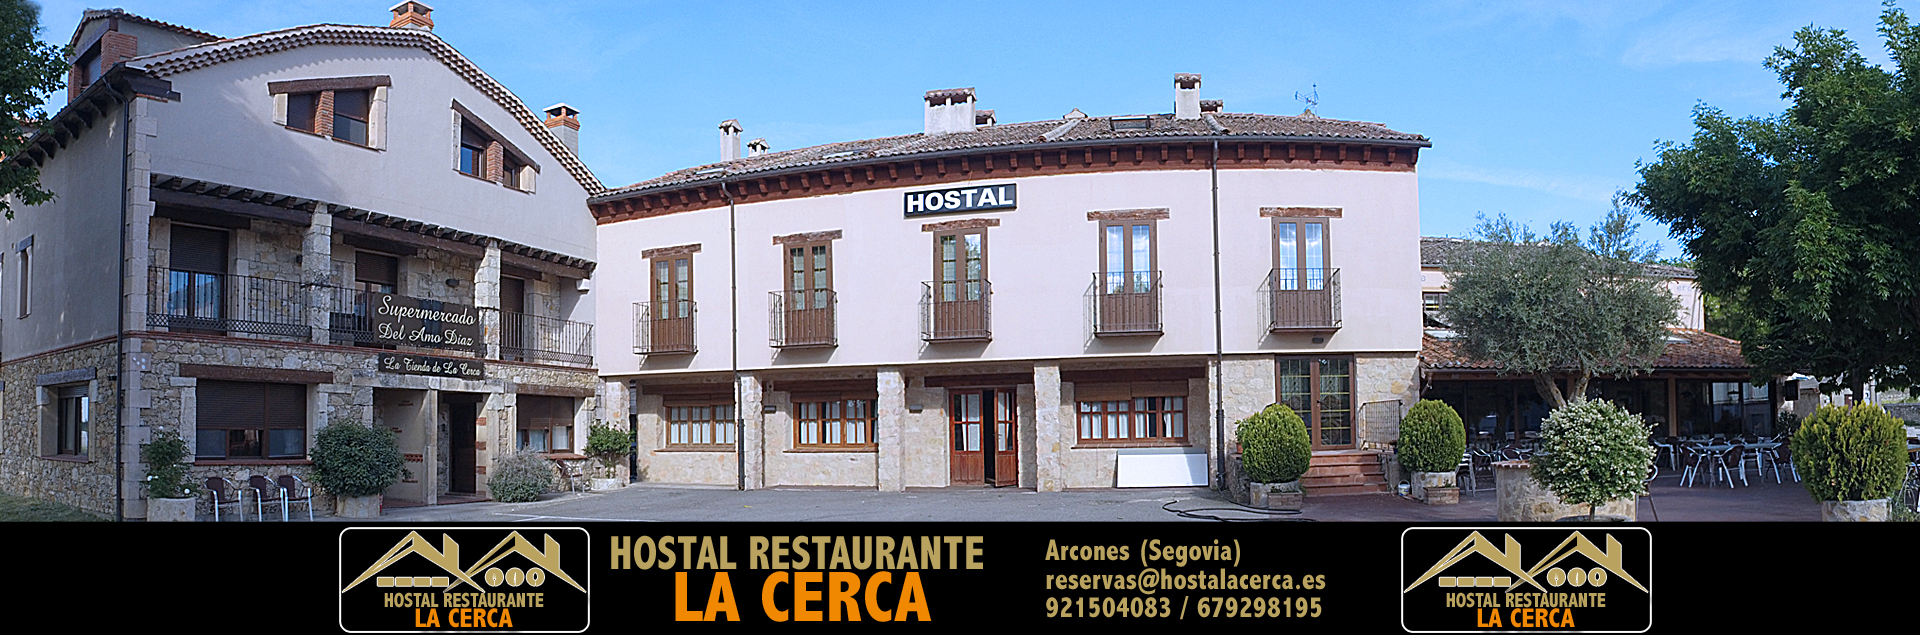 Hostal Restaurante La Cerca